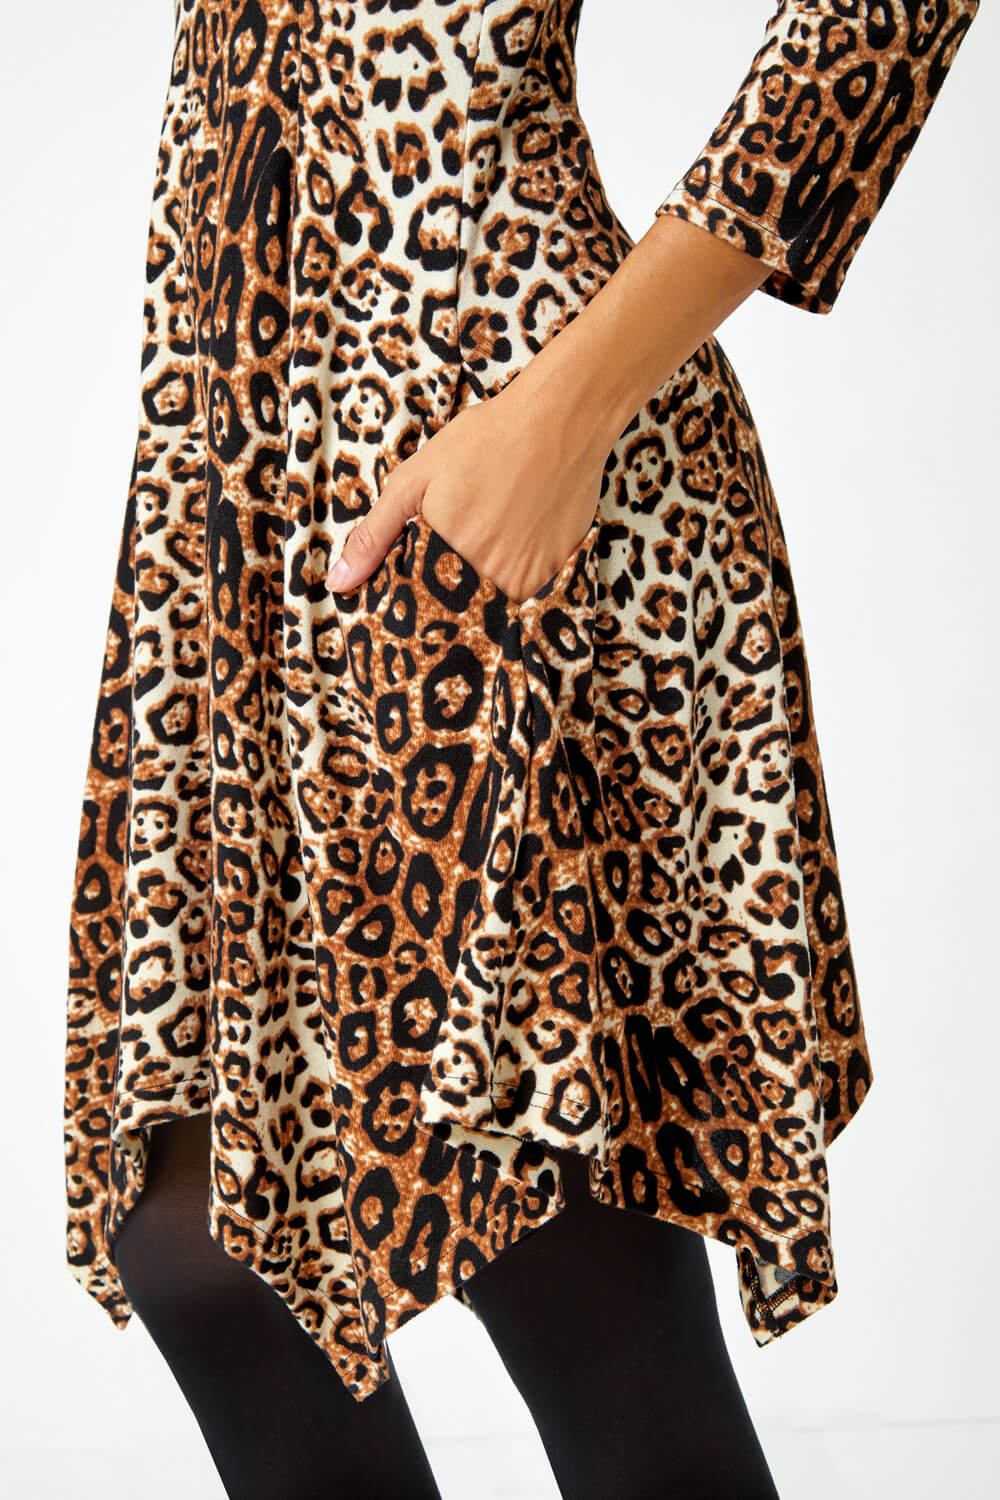 Beige Leopard Print Swing Stretch Dress, Image 5 of 5